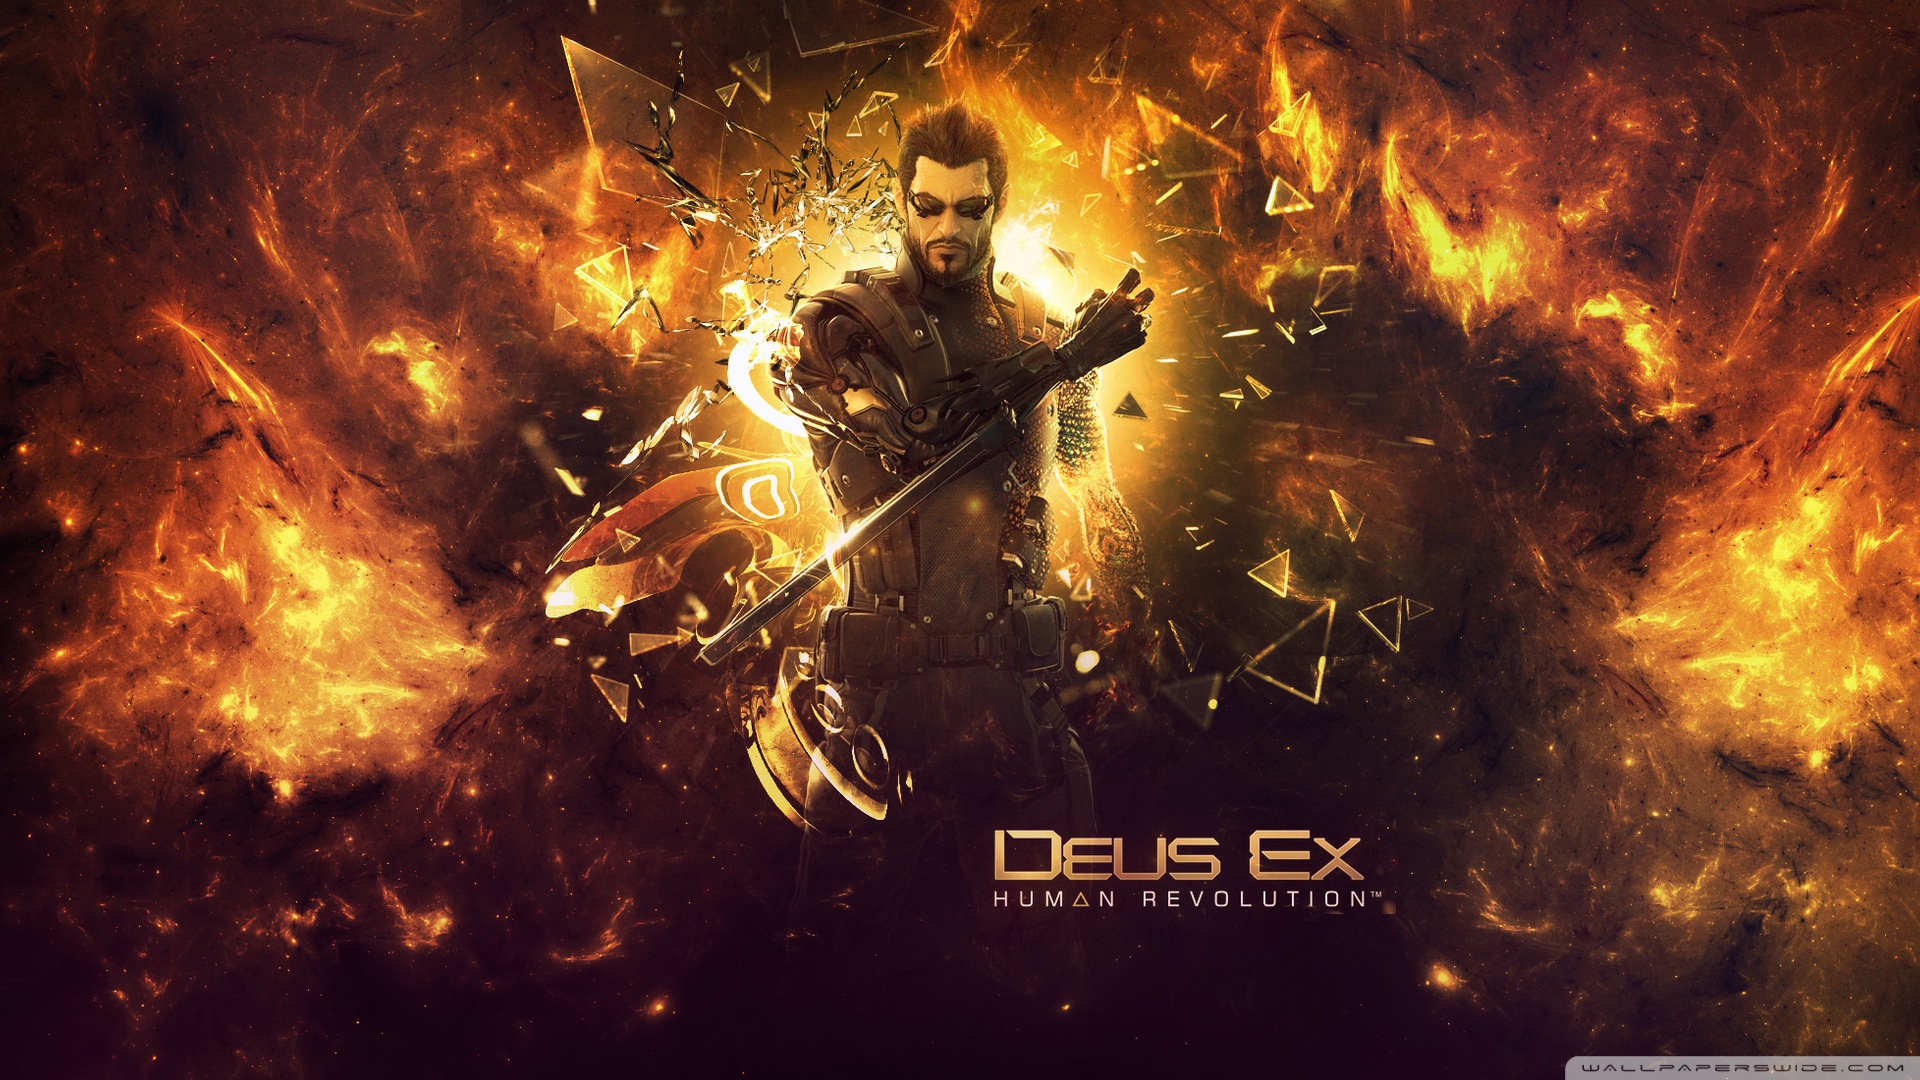 Human Revolution Wallpaper Deus Ex